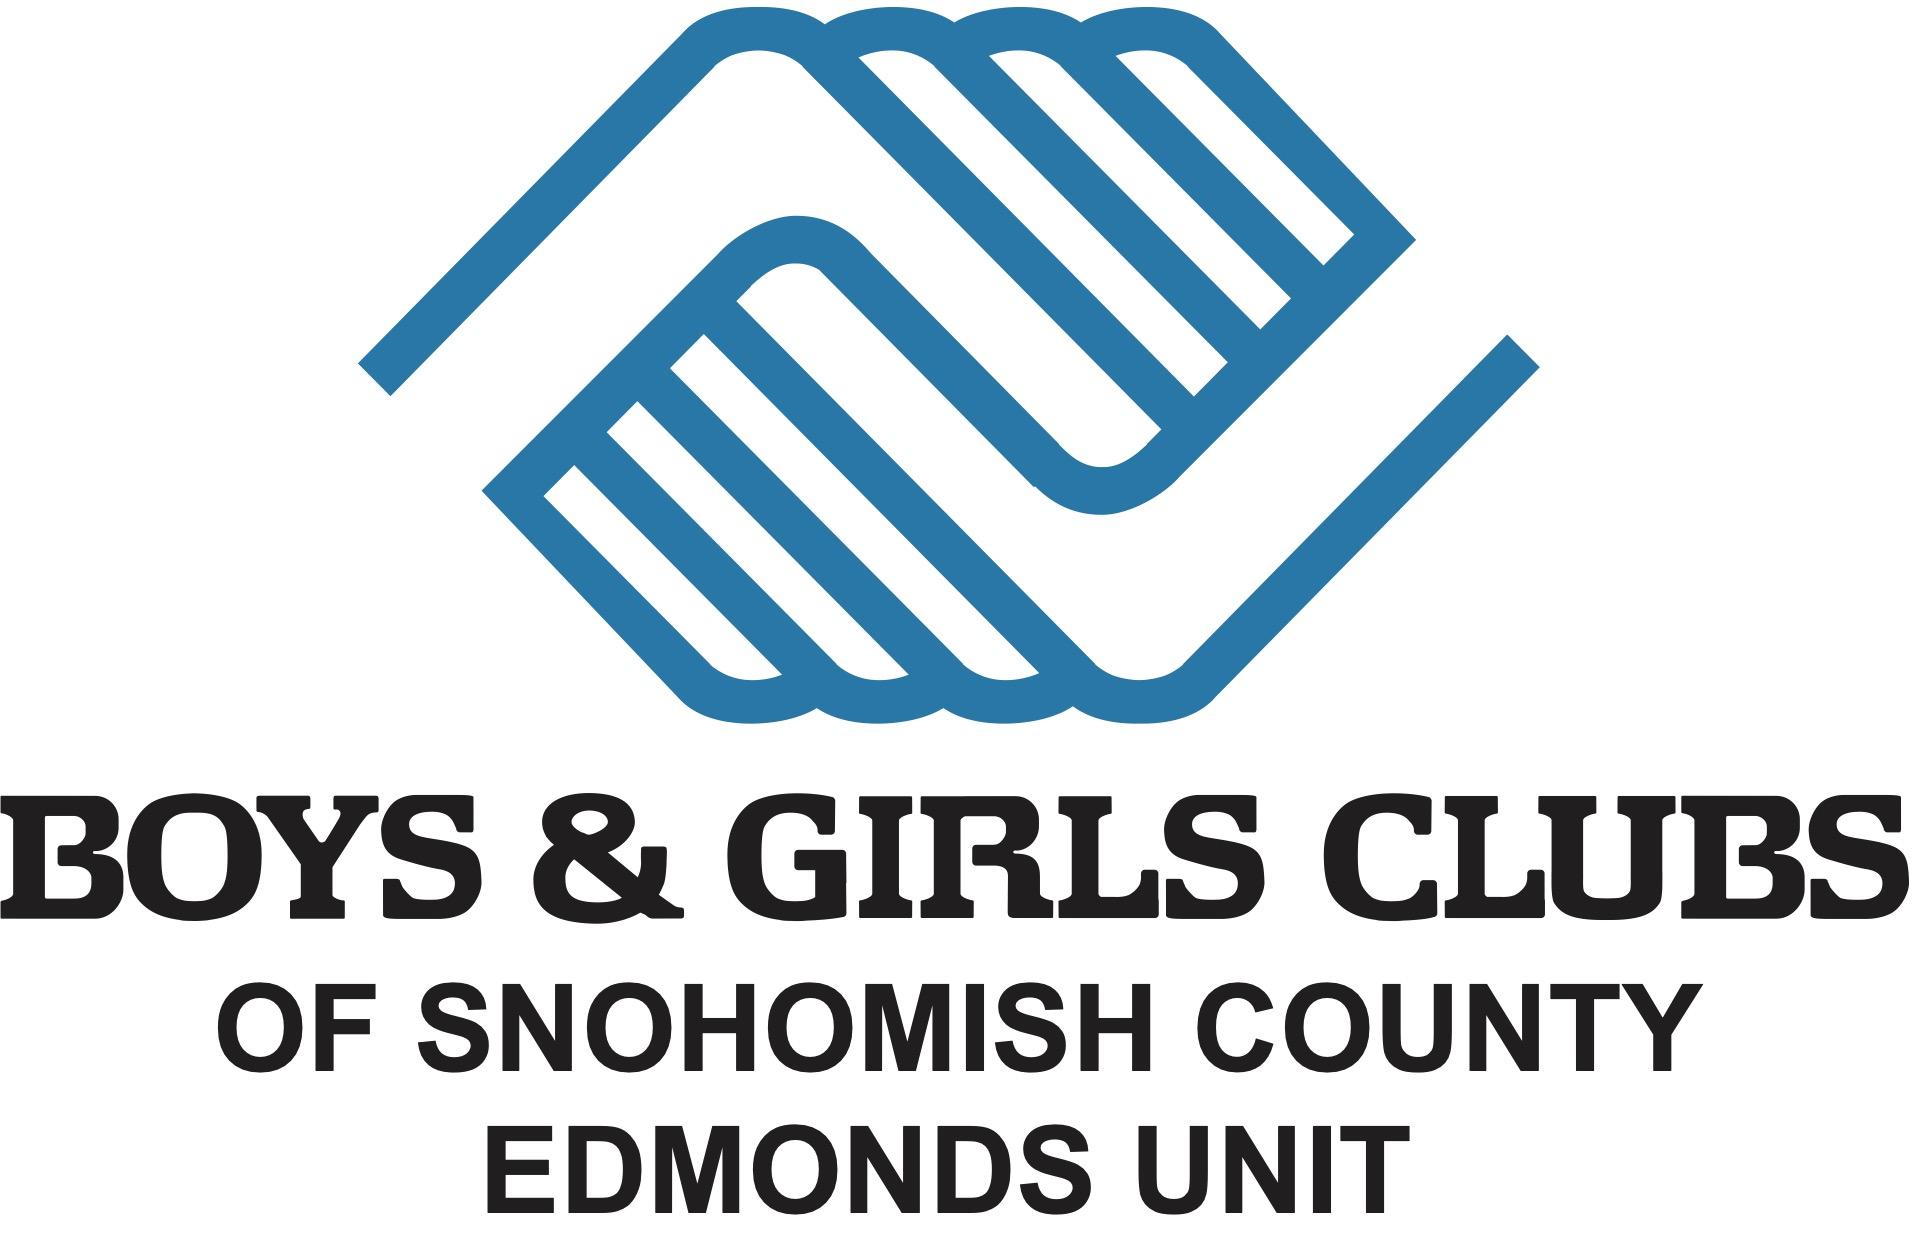 Boys & Girls Clubs of Snohomish County Edmonds Unit logo